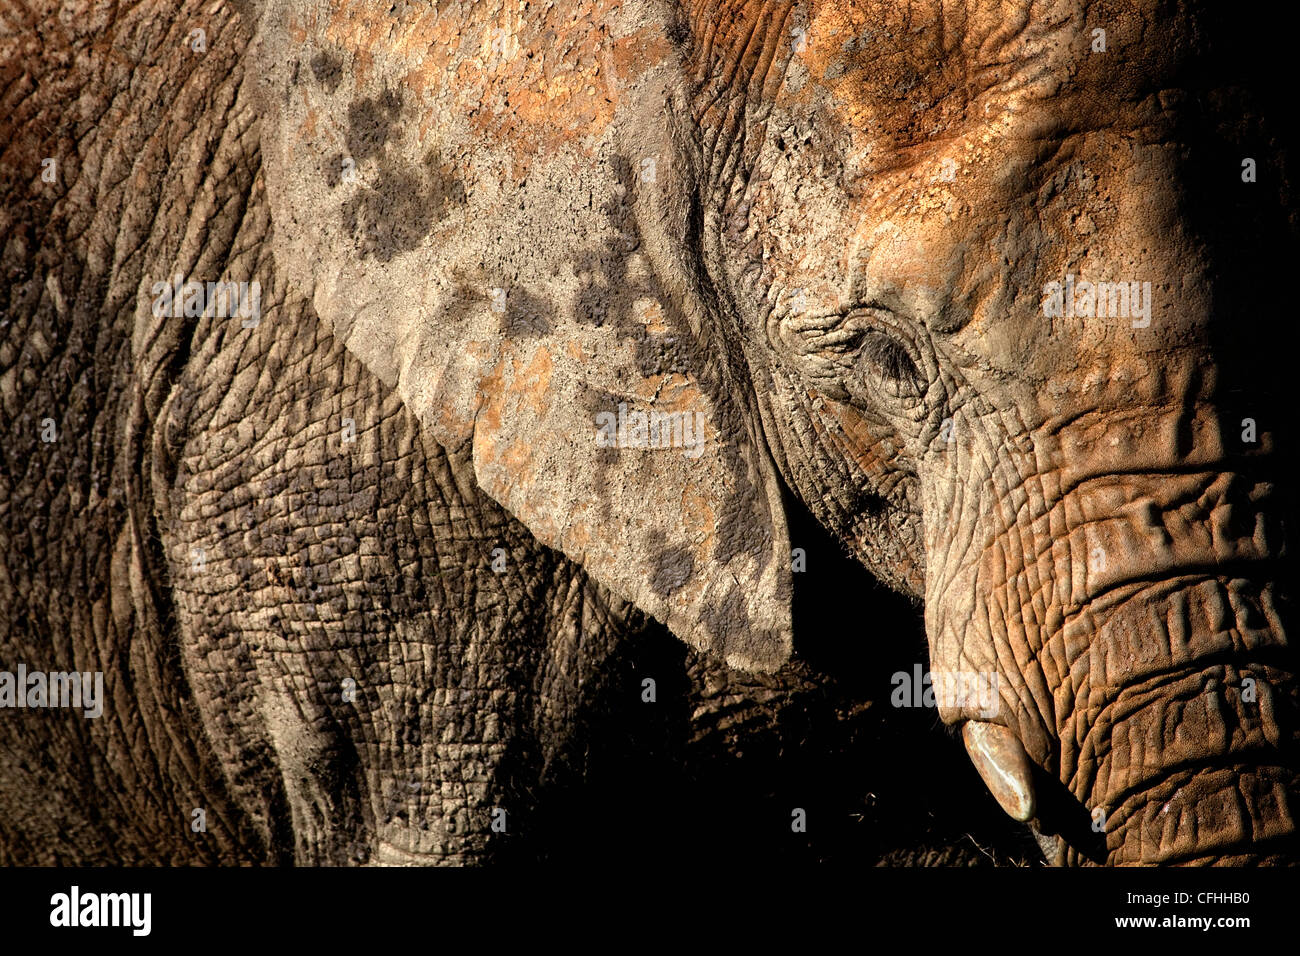 Afrikanischer Elefant Porträt, Cabarceno, Spanien Stockfoto